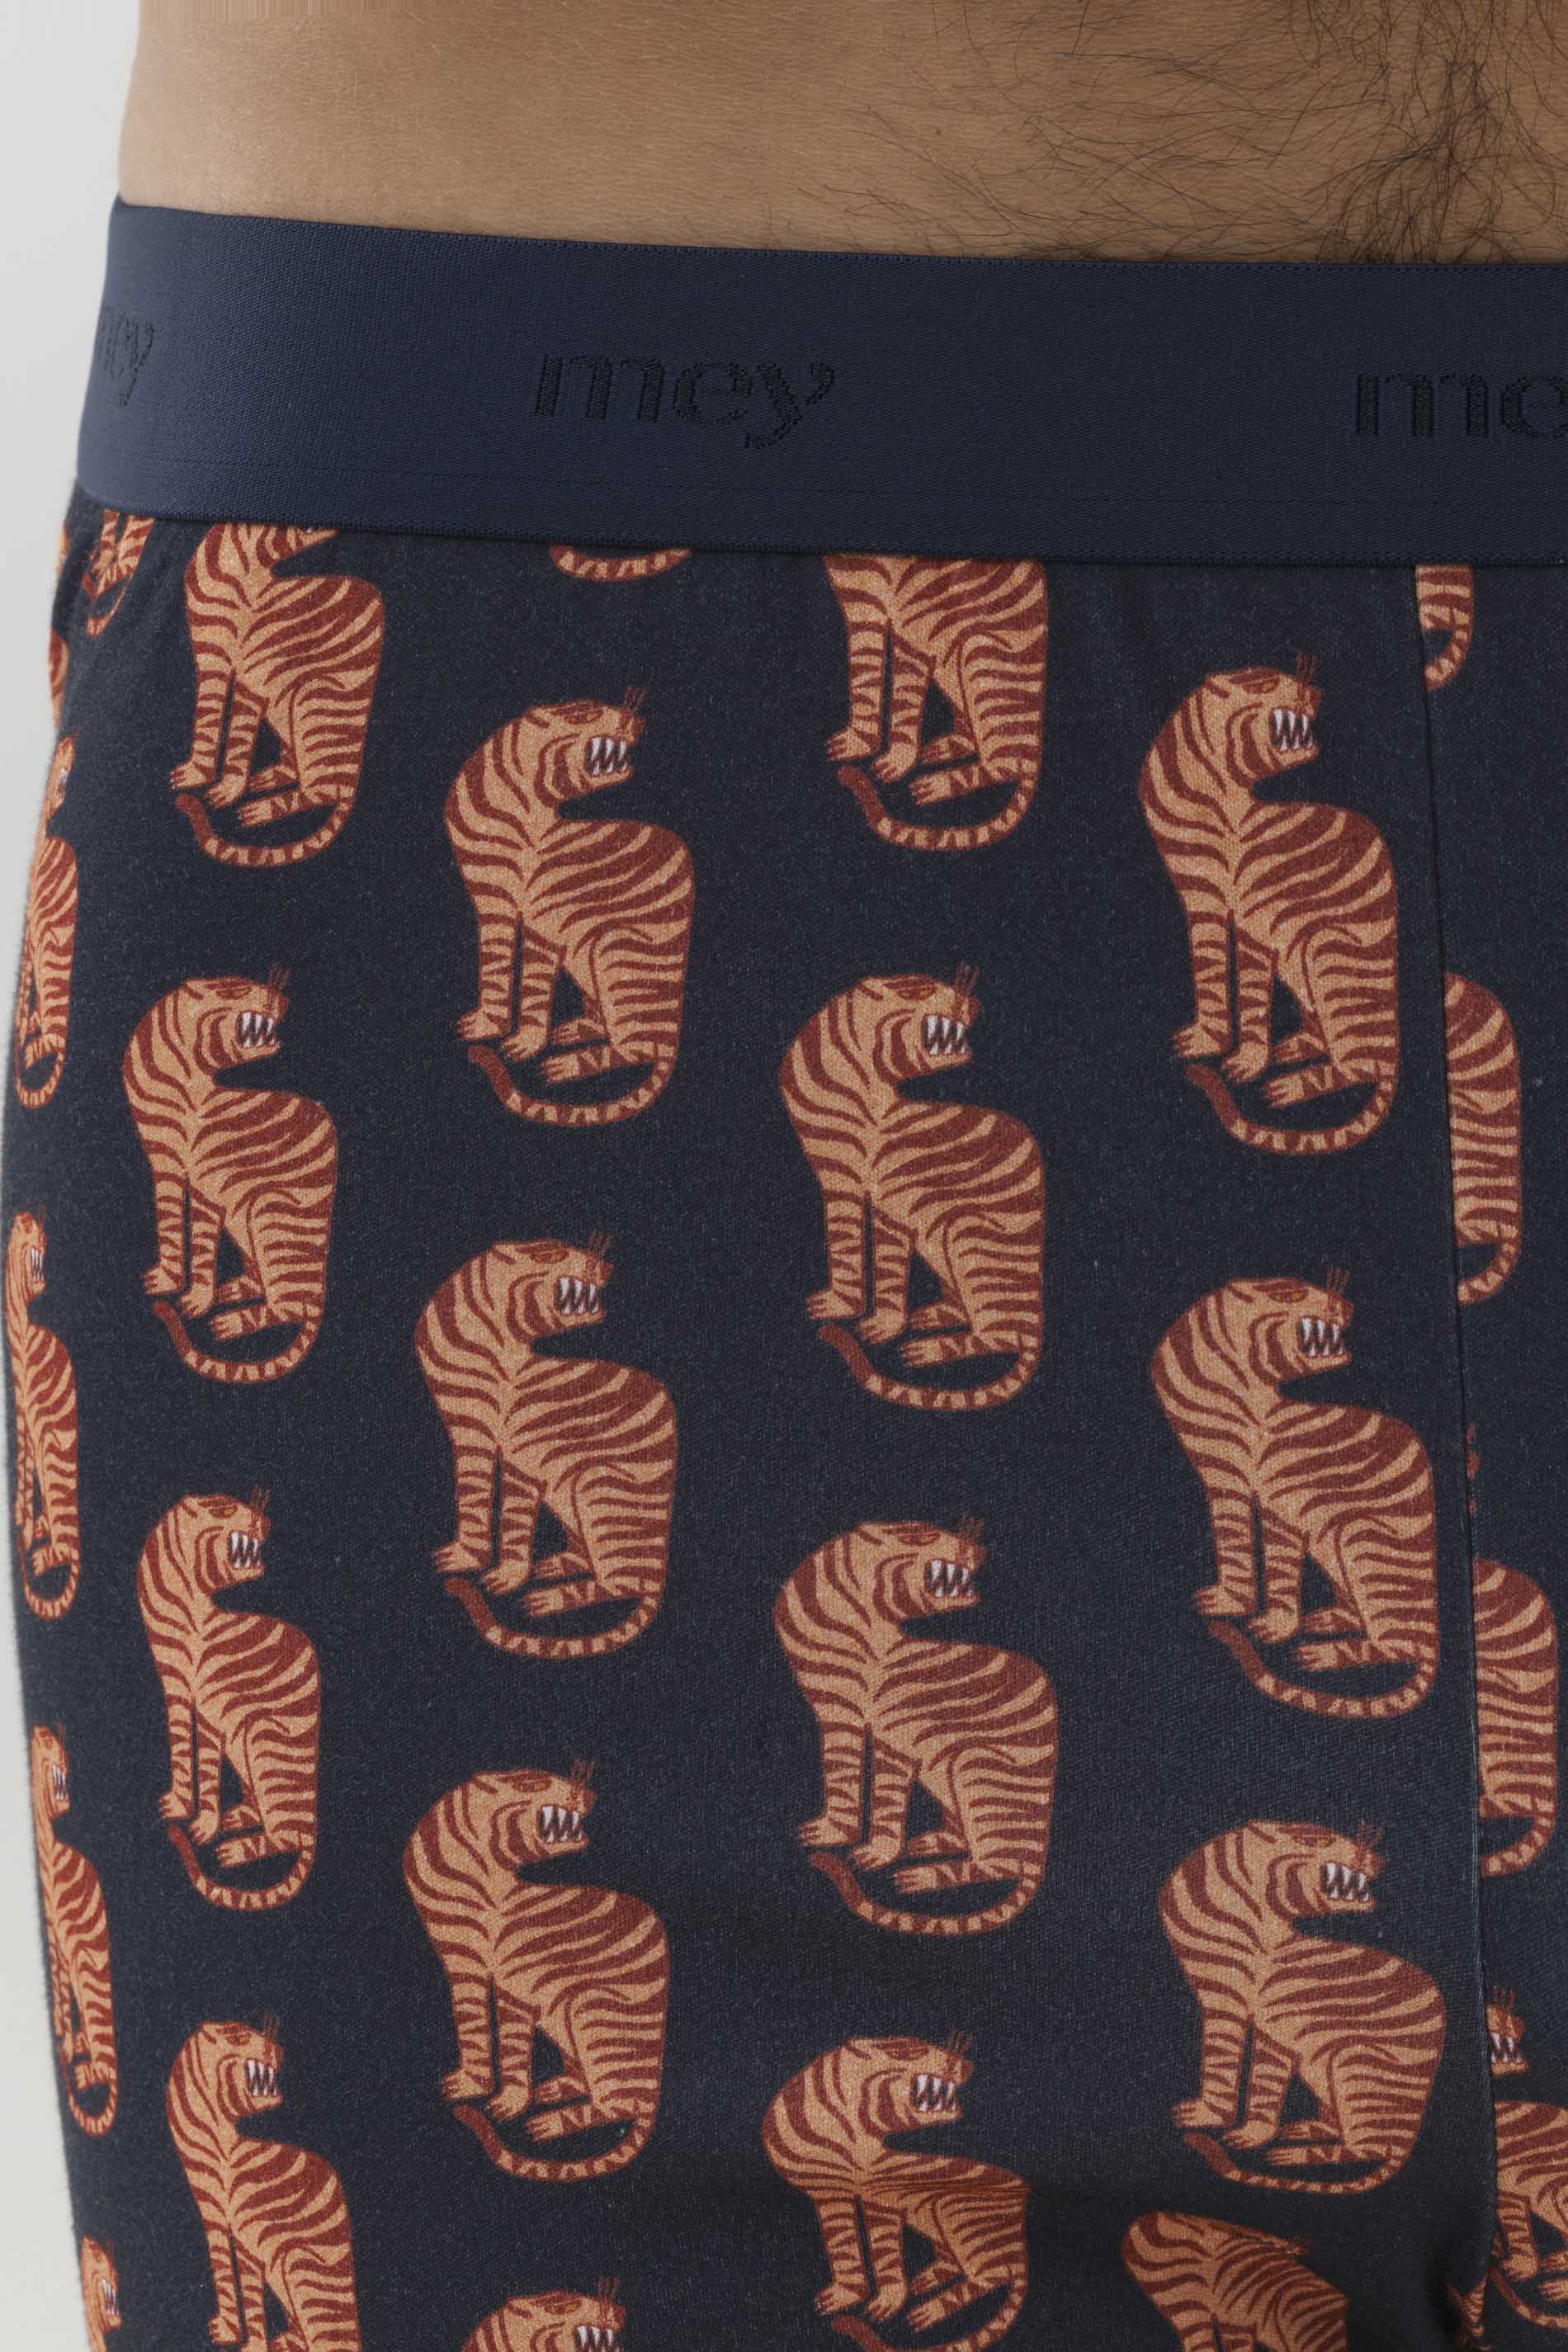 Pyjamas Serie RE:THINK Tiger Detail View 02 | mey®